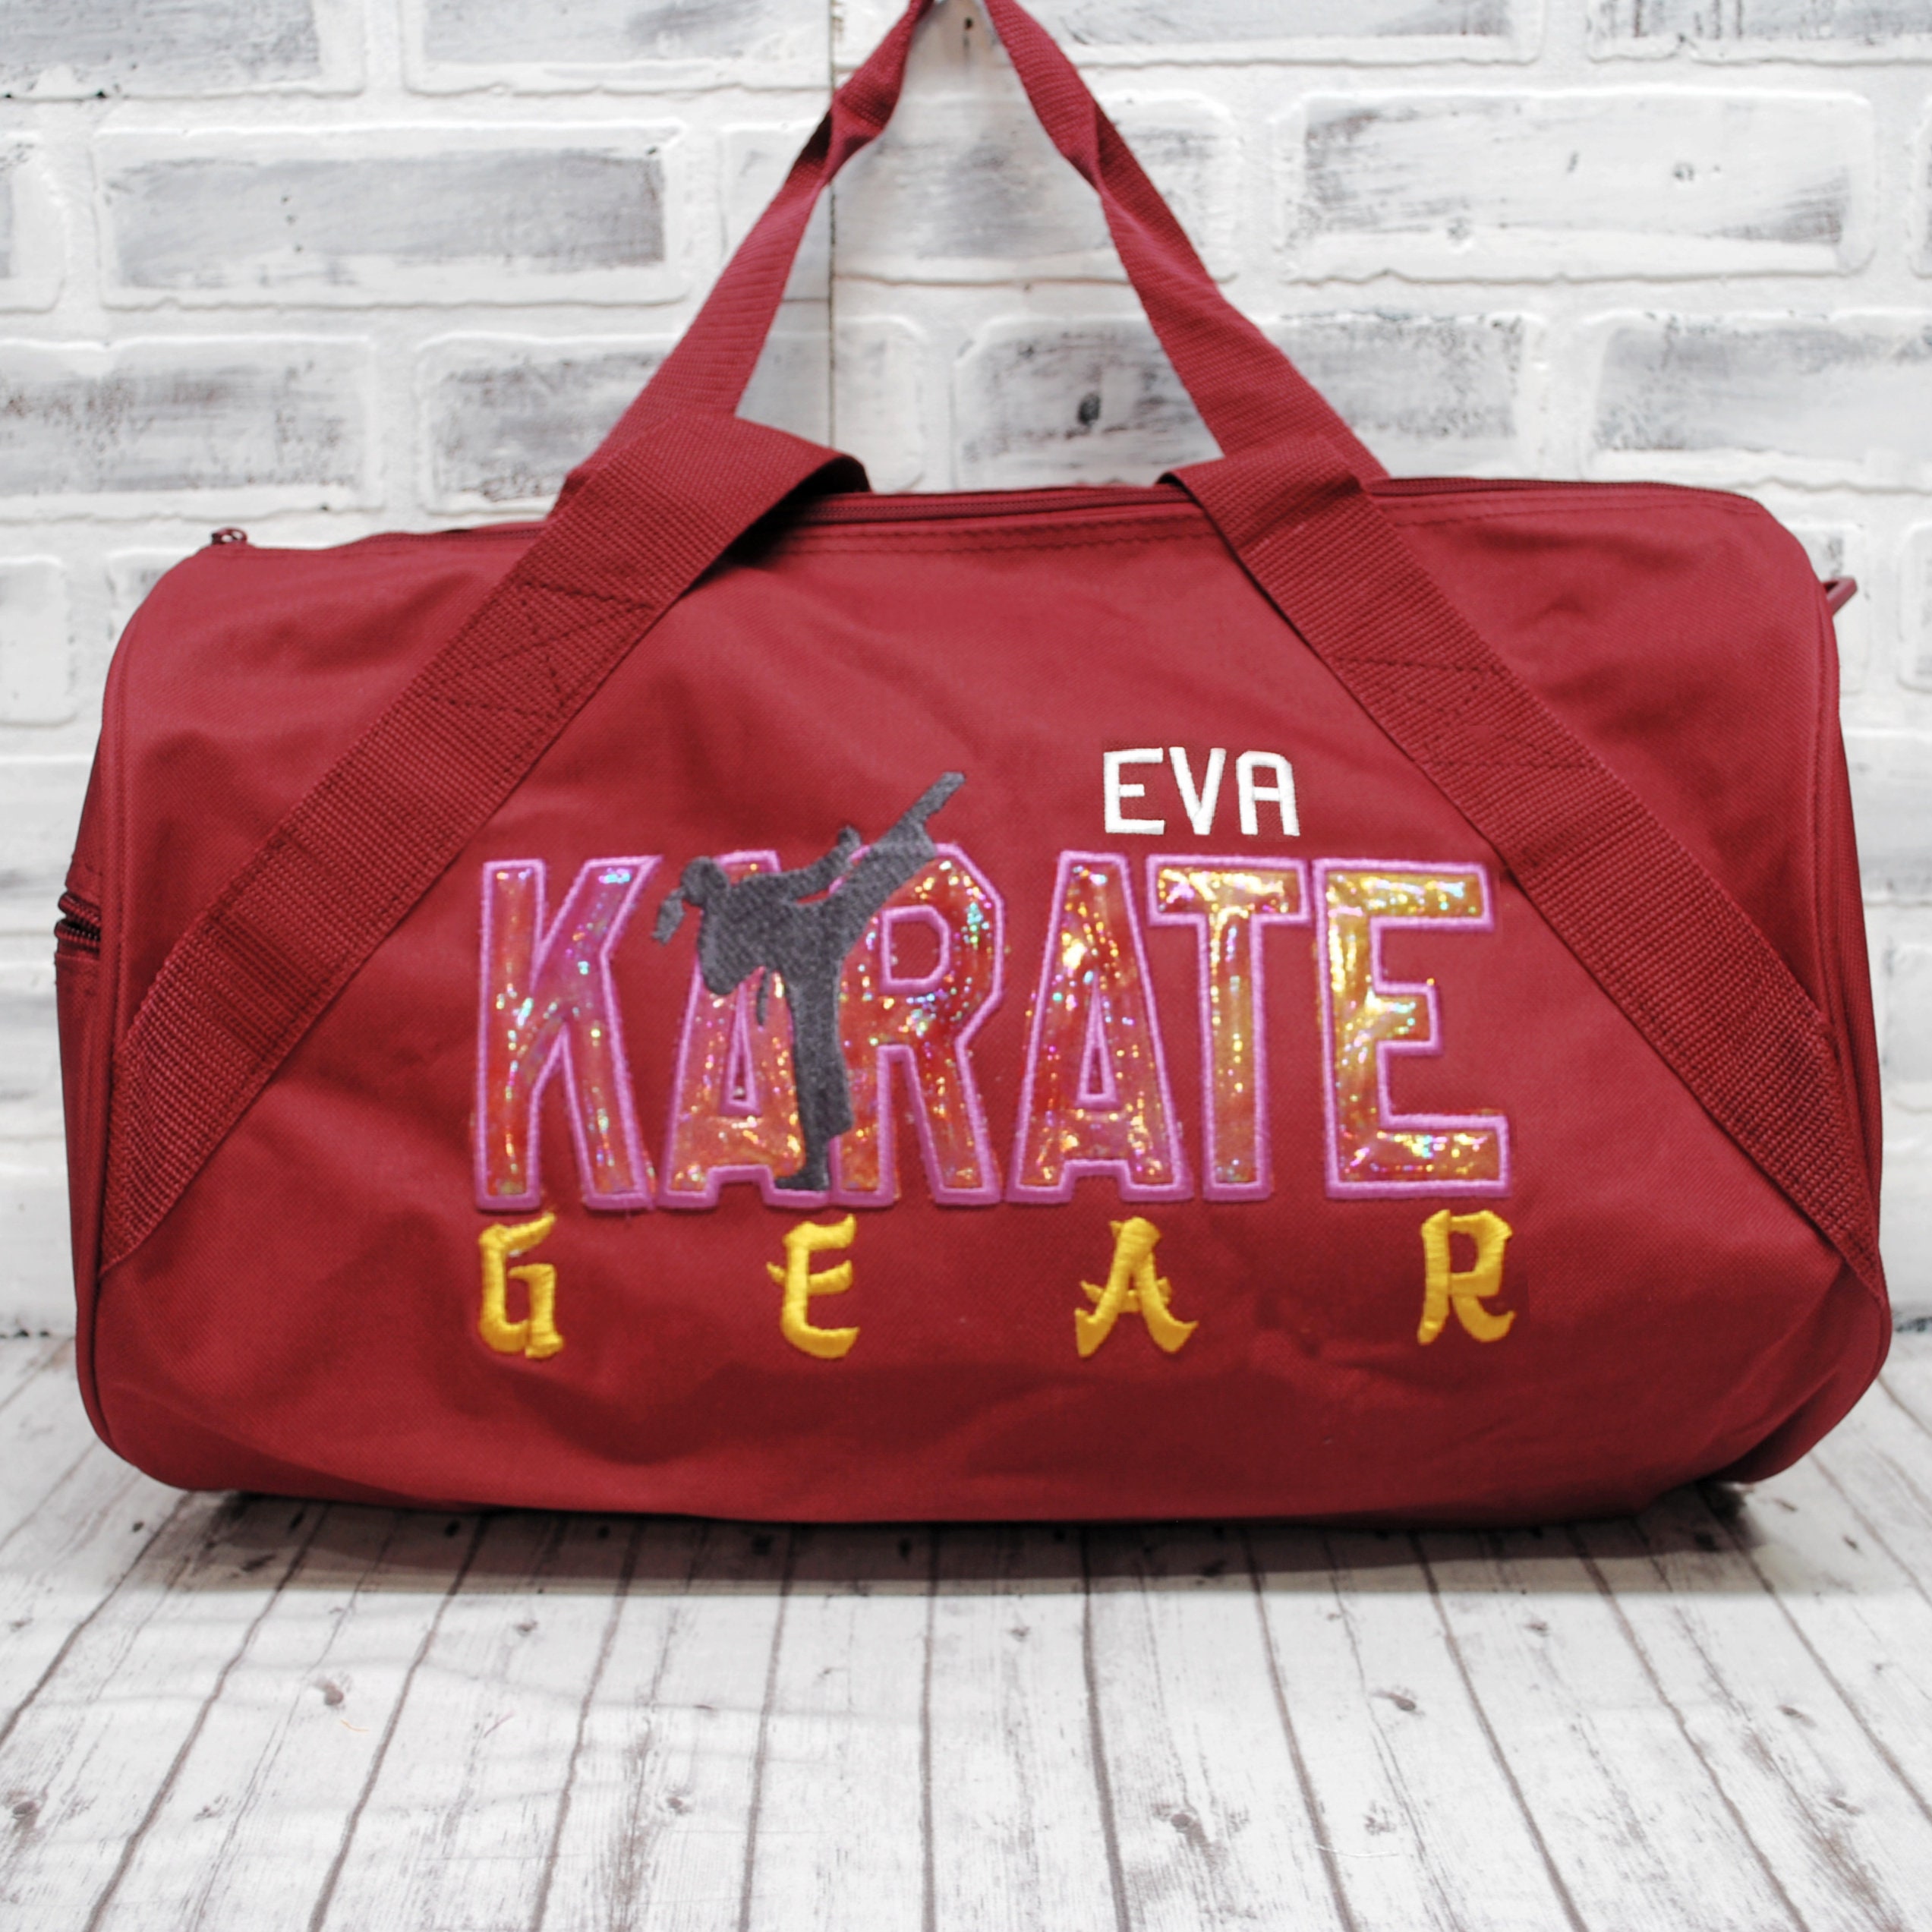 Boxing bag Karate bag punching bag - Sports Equipment - 1761340001